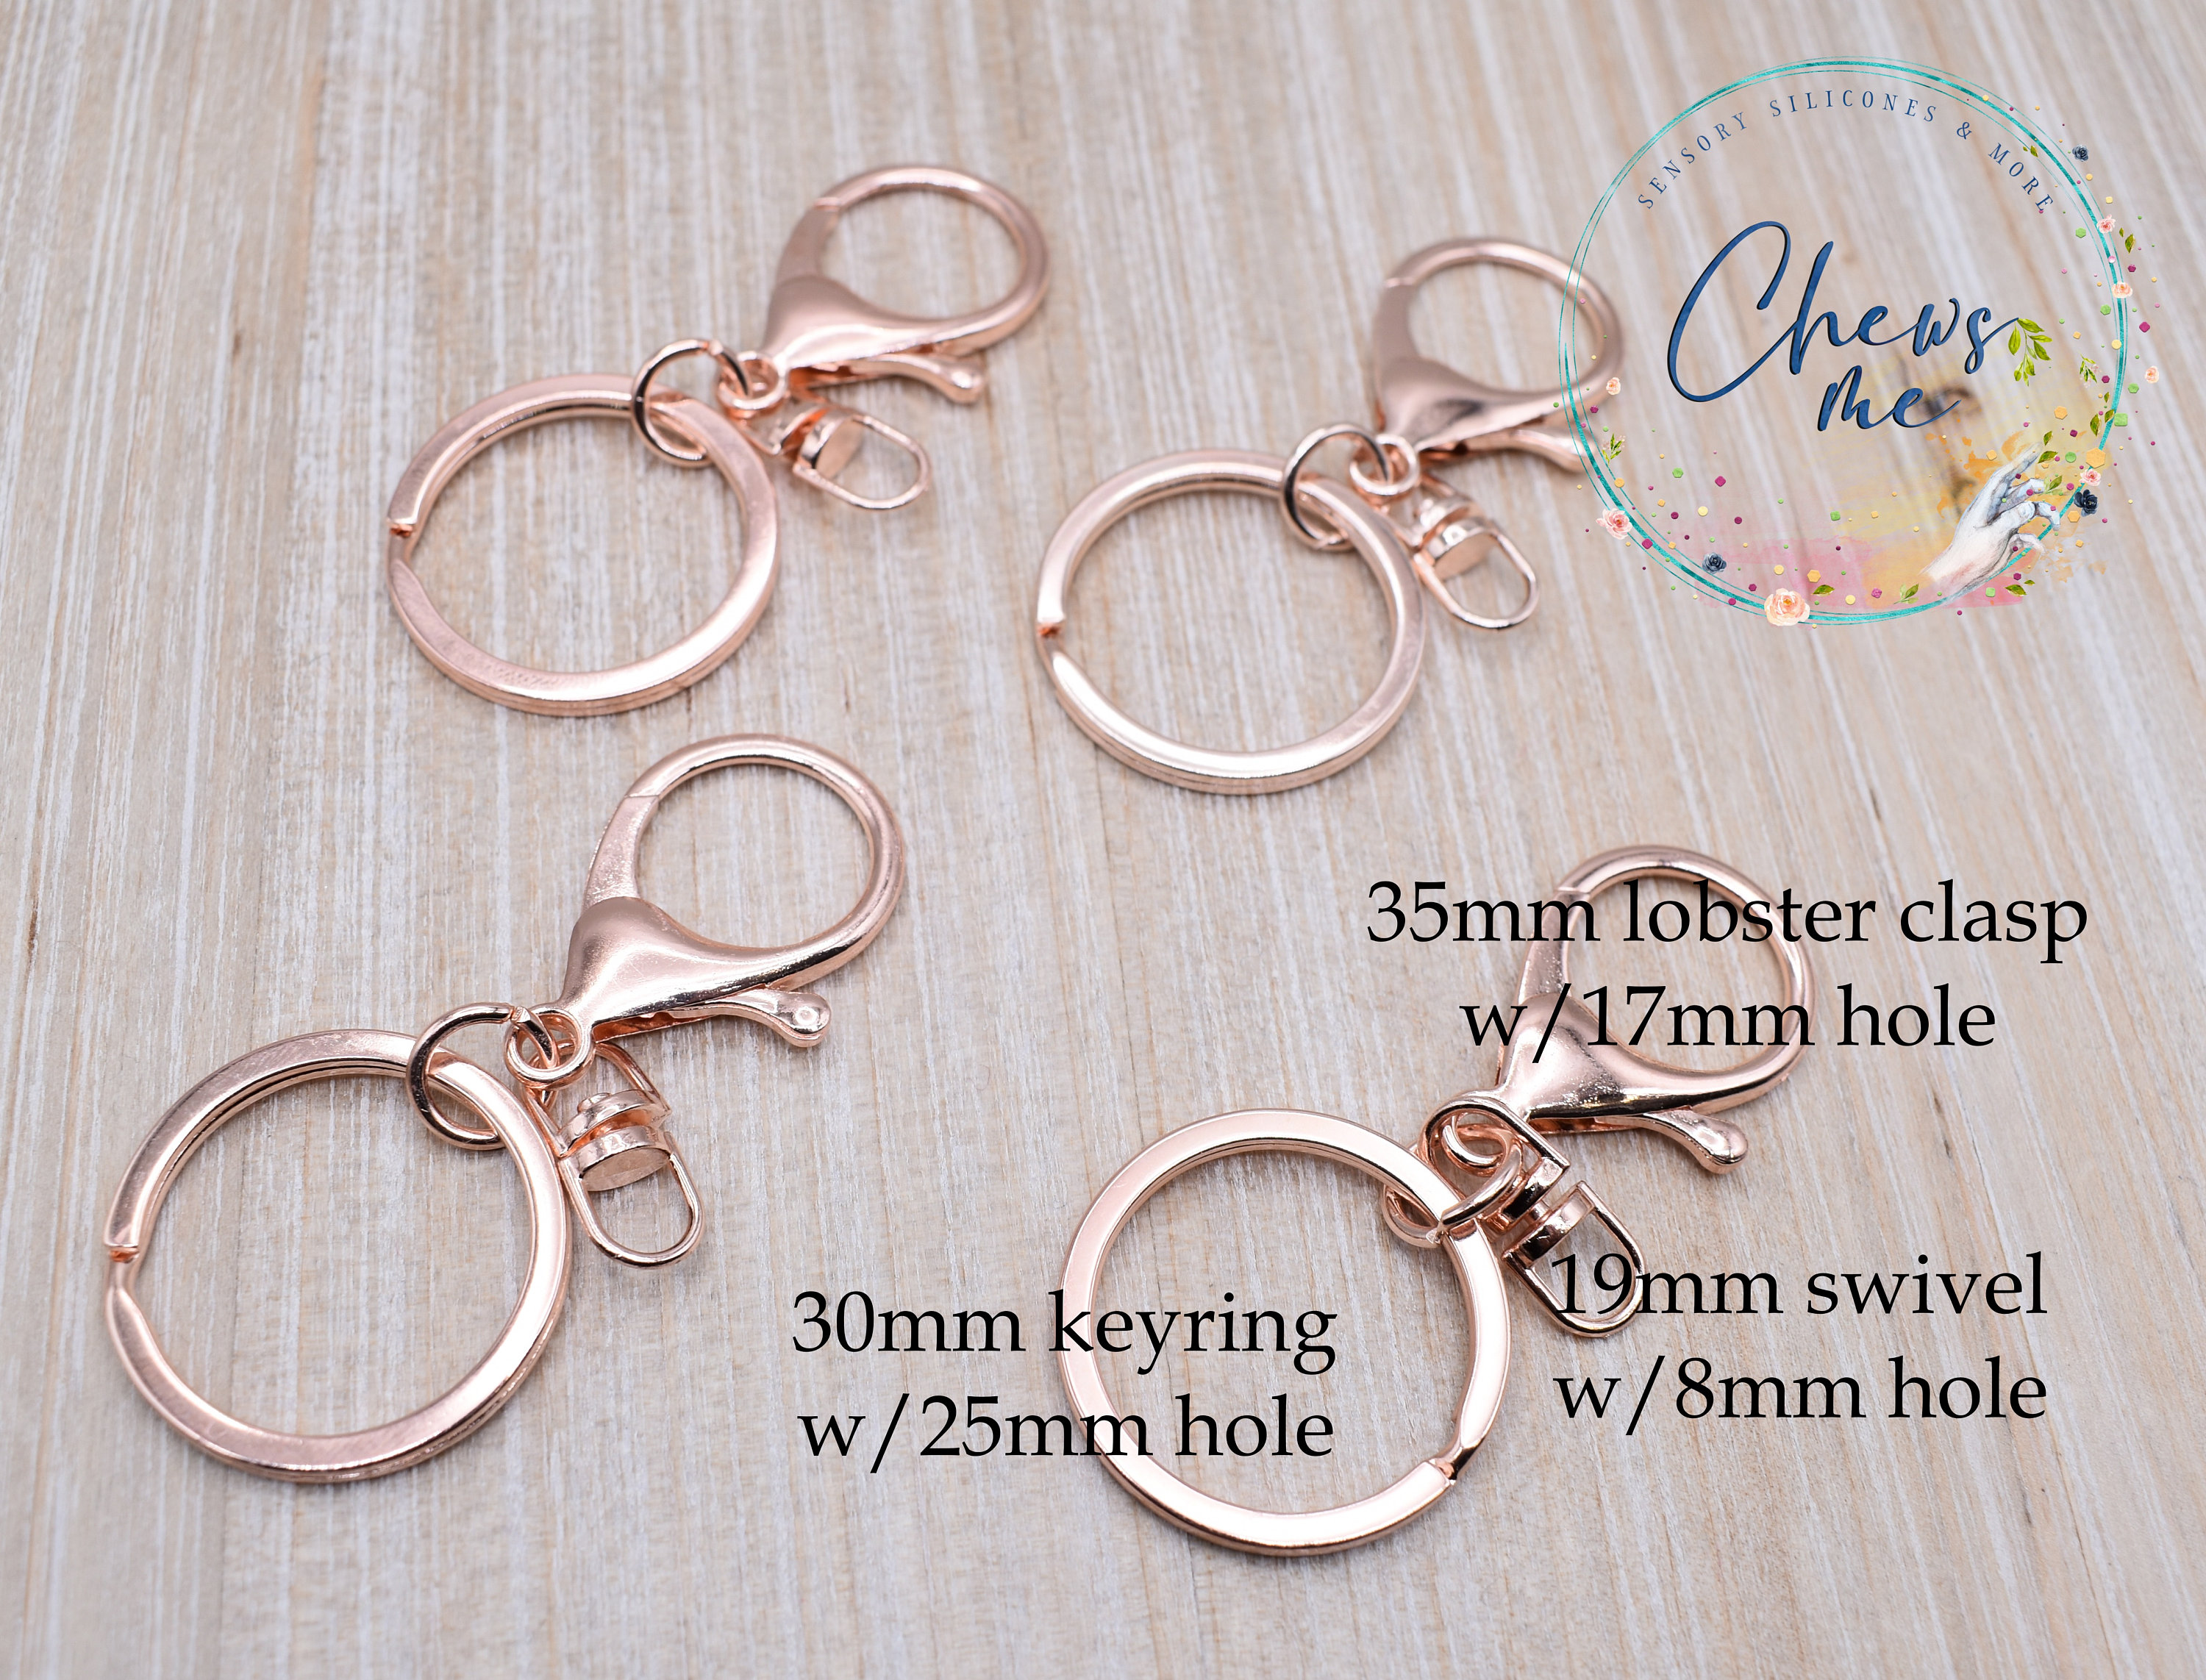 1pc, Acrylic Keychain Blank With Key Rings Tassels Key Chain For Craft,  Bulk Keychain Rings, Acrylic Keychain Blanks Rings, Key Chain Kit Leopard  Chri